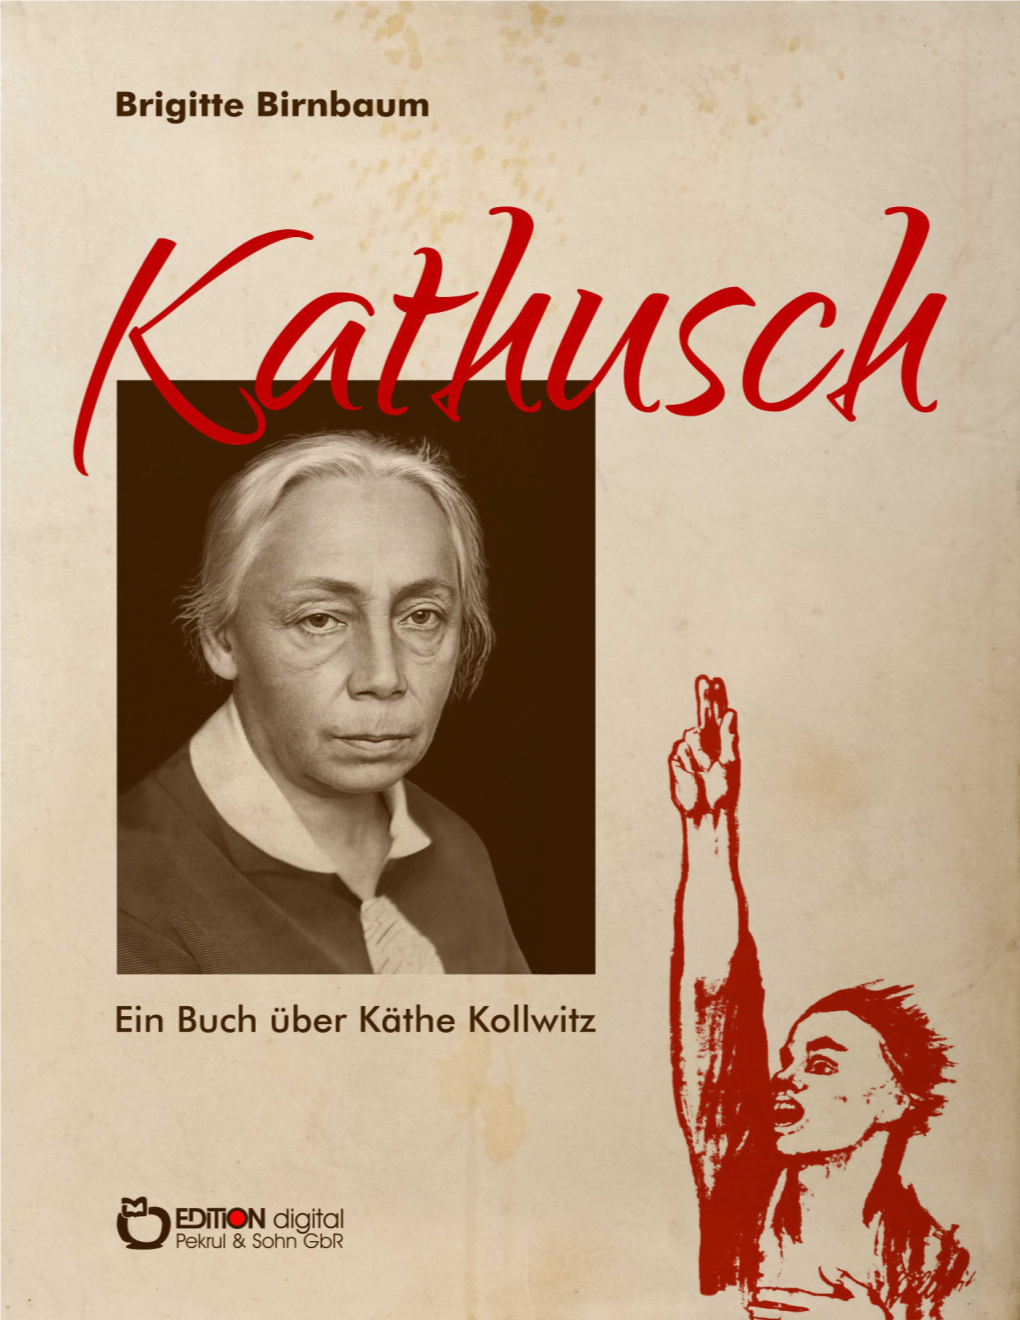 Kathusch Ein Buch Über Käthe Kollwitz ISBN 978-3-86394-071-3 (E-Book)